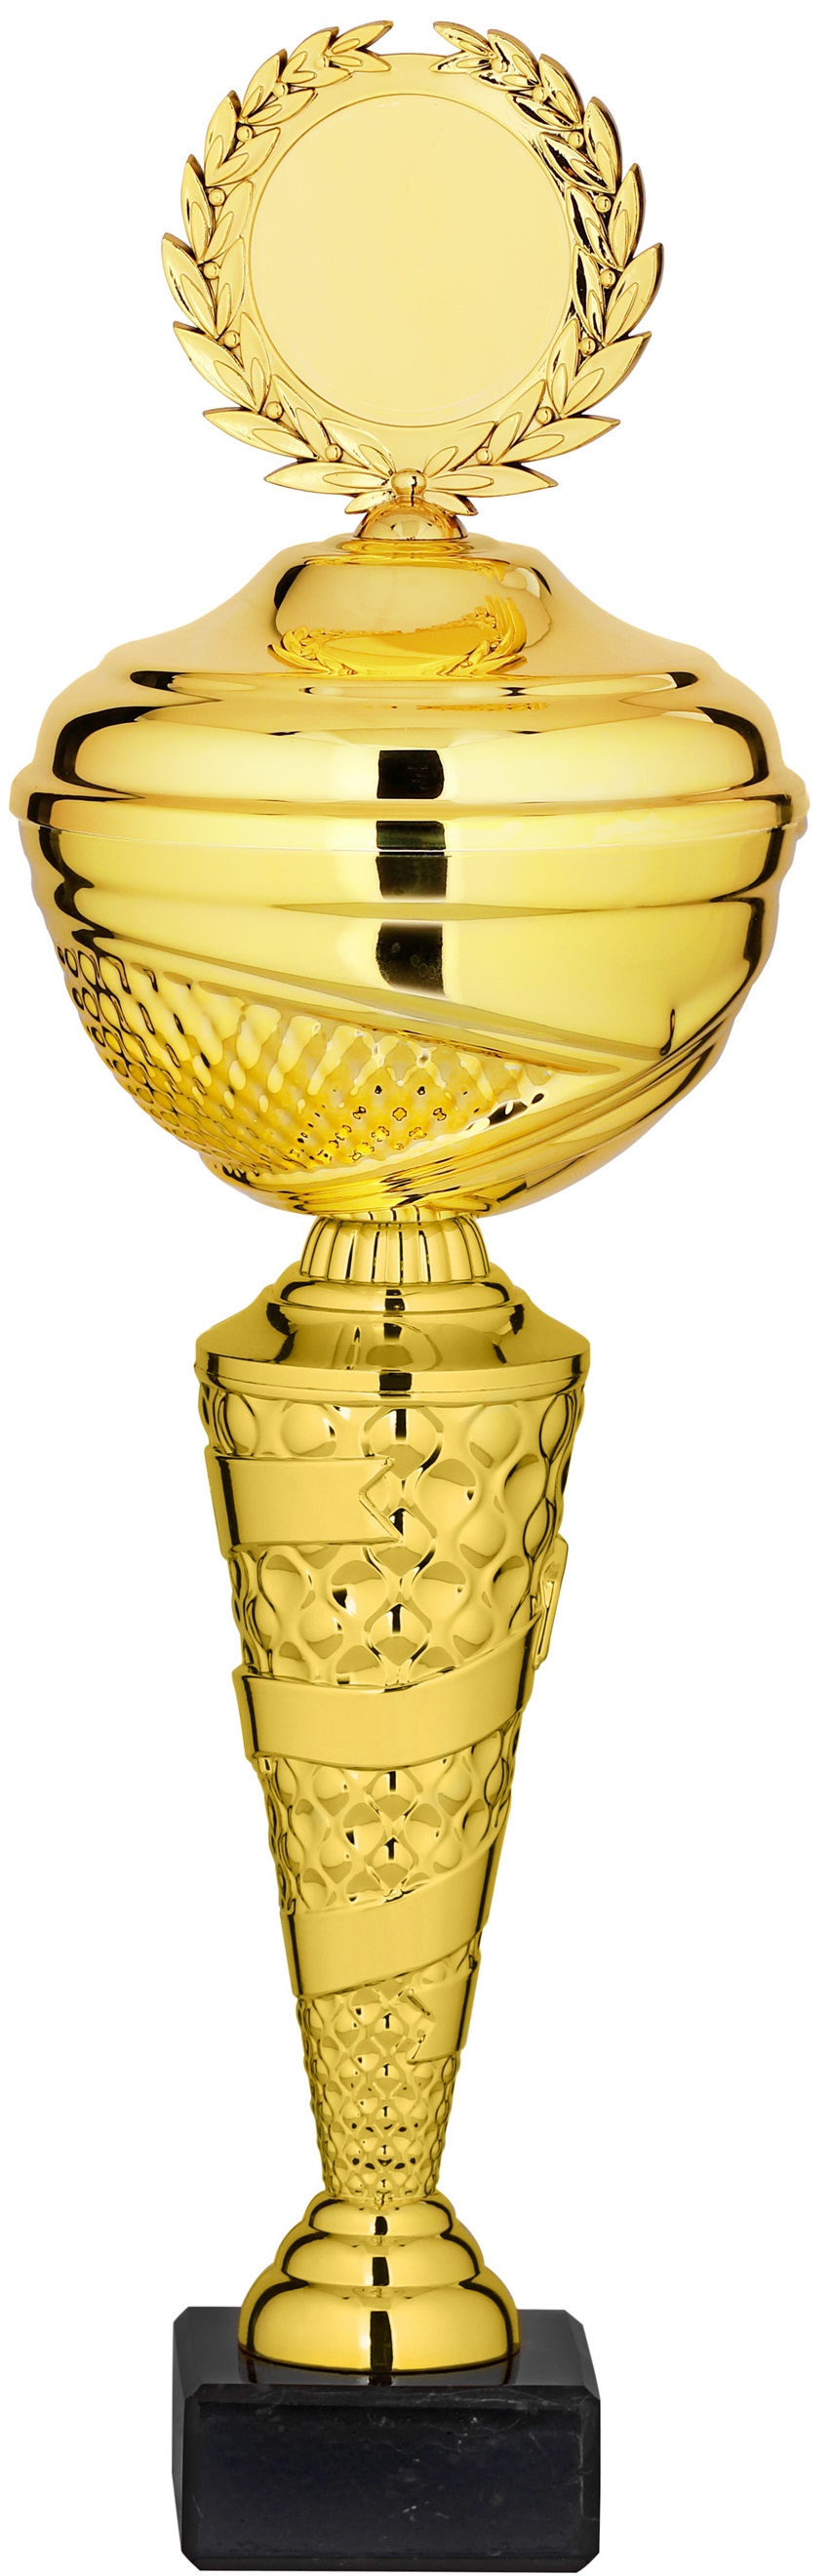 Pokal P600-Gold  inkl. Gravur und Emblem